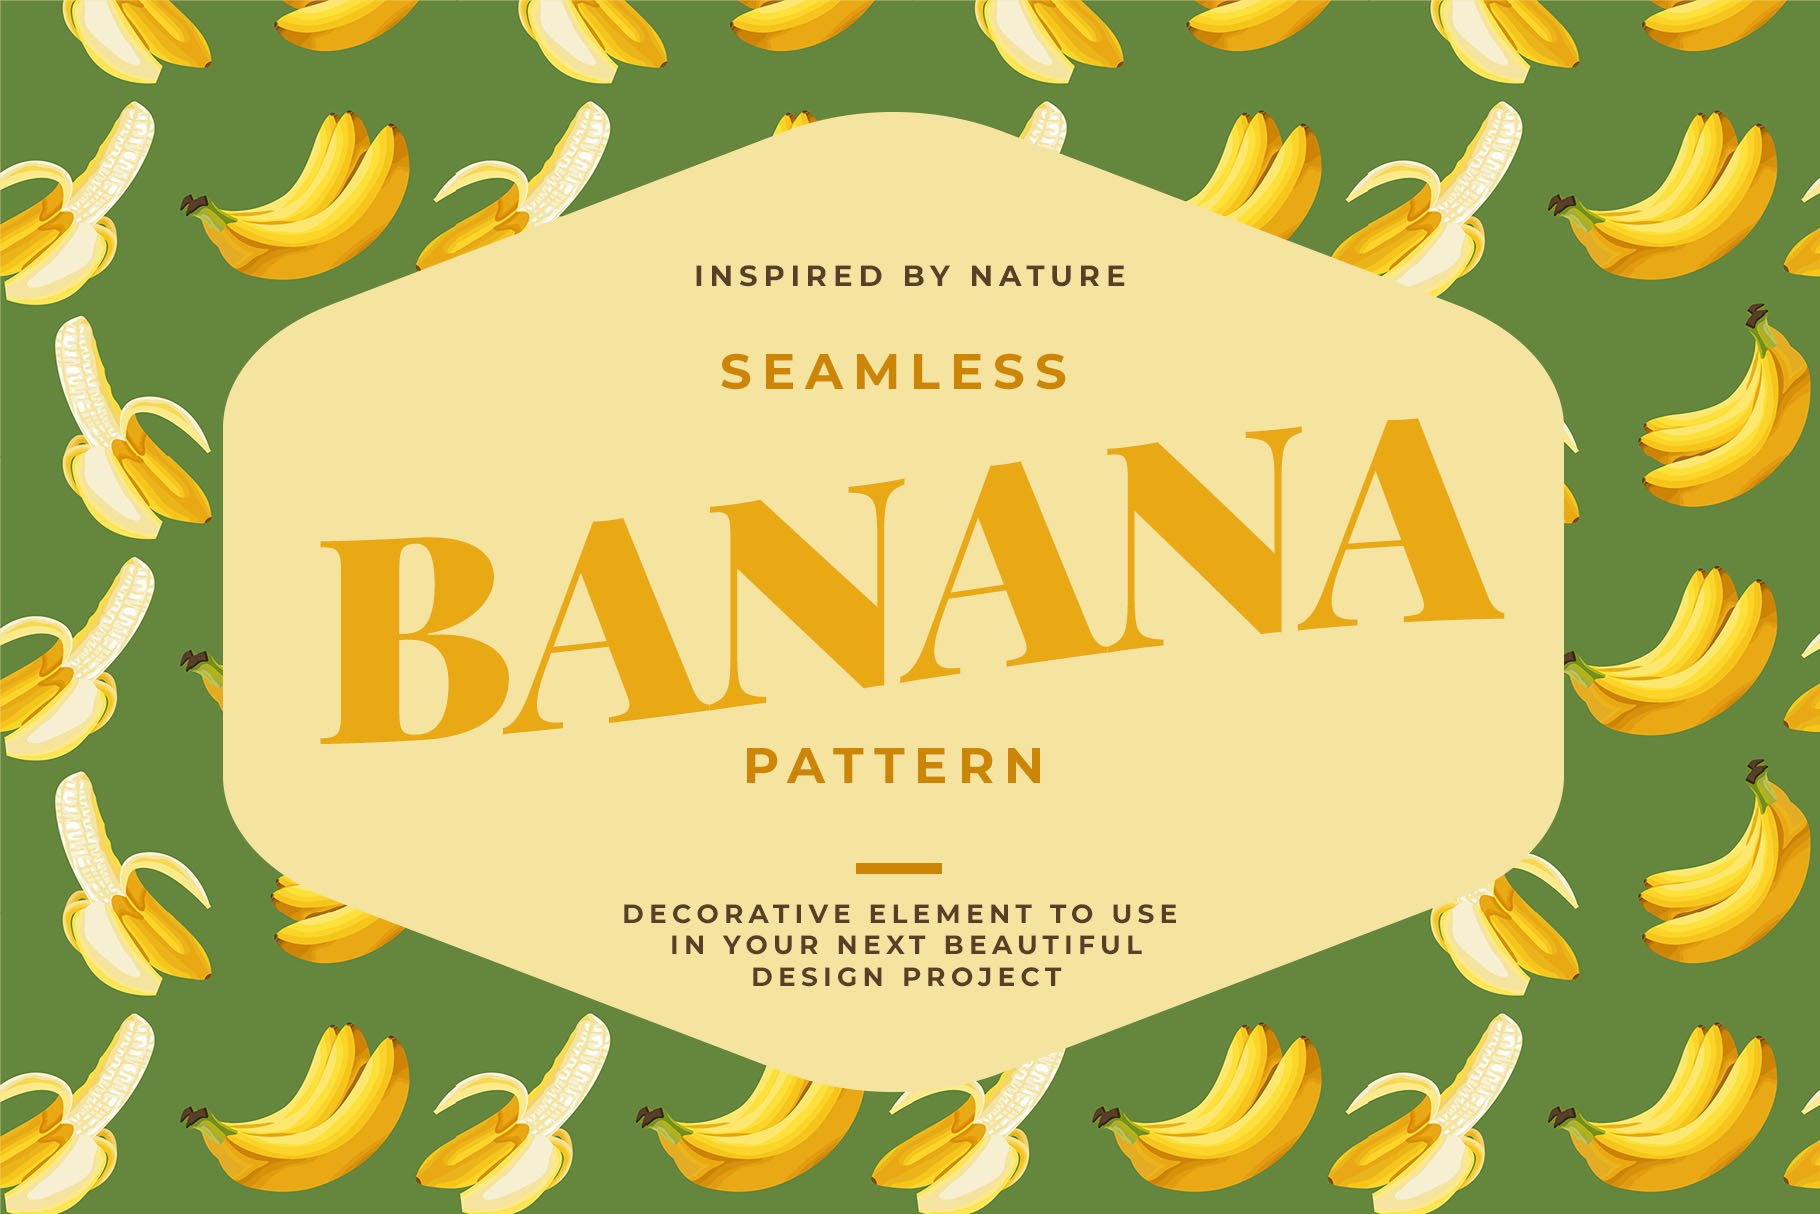 Banana Pattern Design DISC 50% OFF cover image.